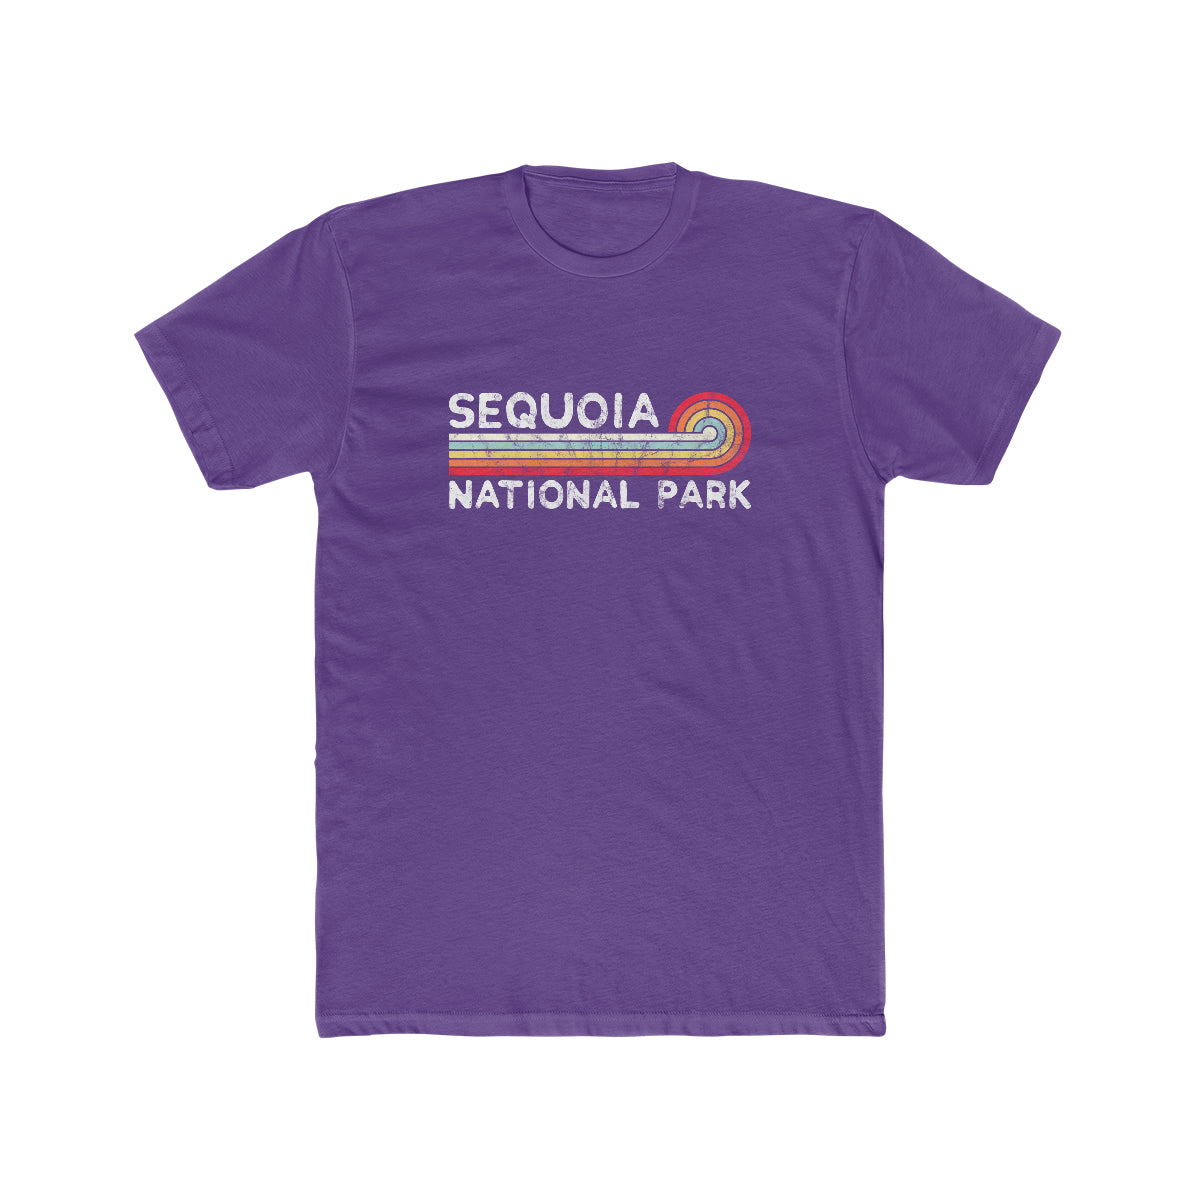 Sequoia National Park T-Shirt - Vintage Stretched Sunrise